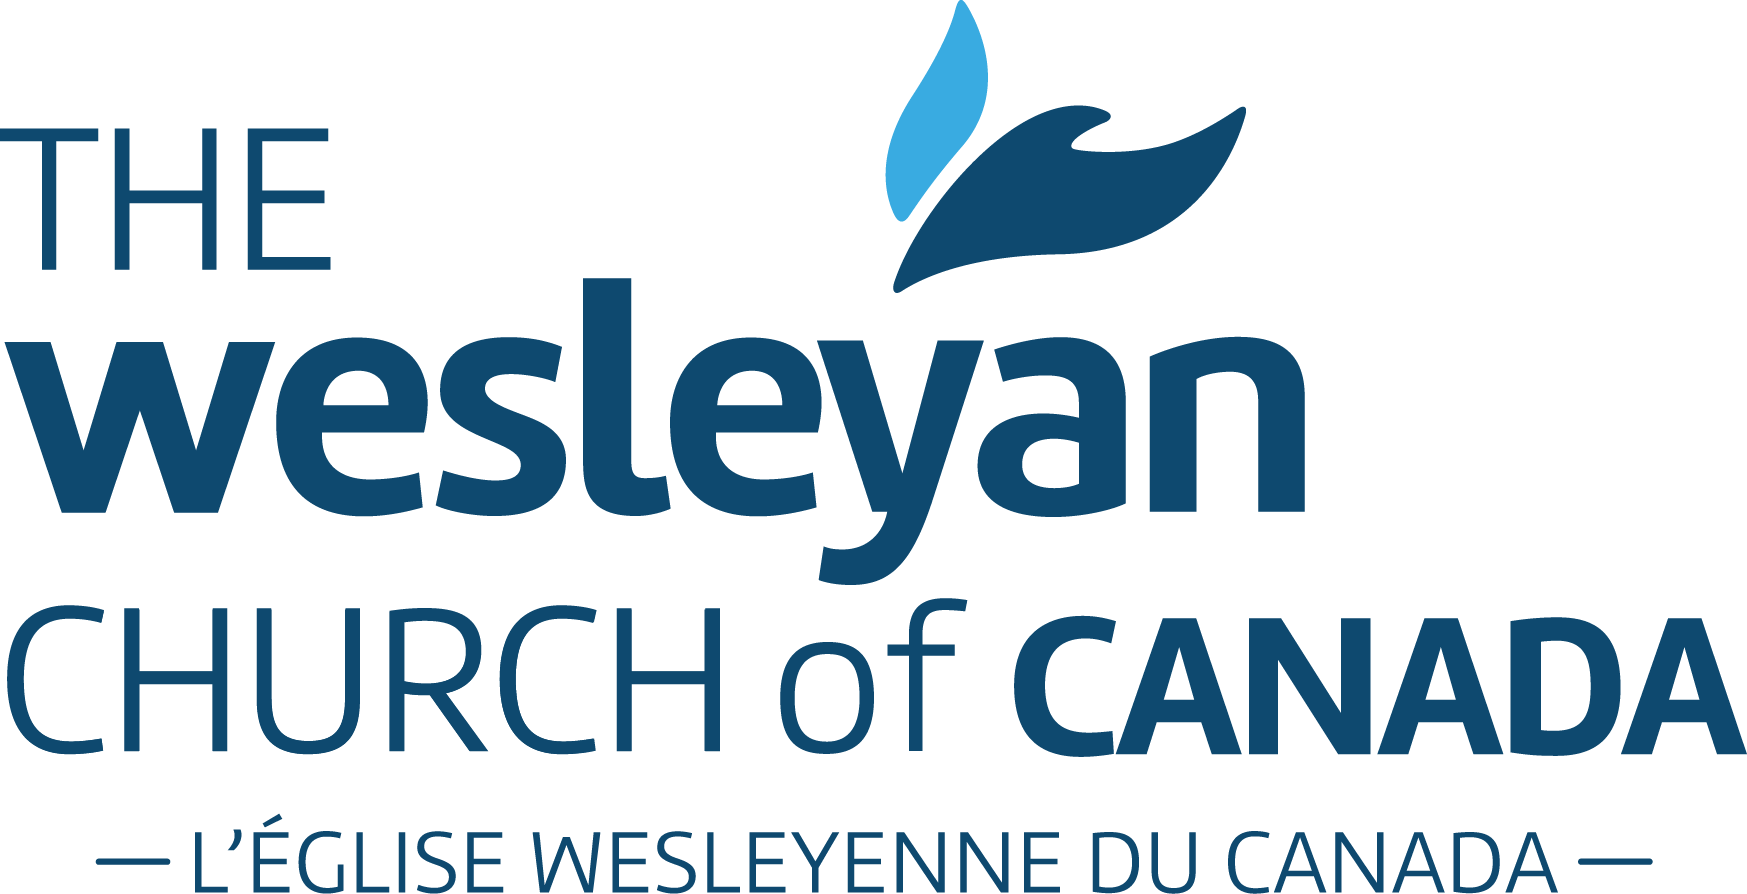 The Wesleyan Church of Canada